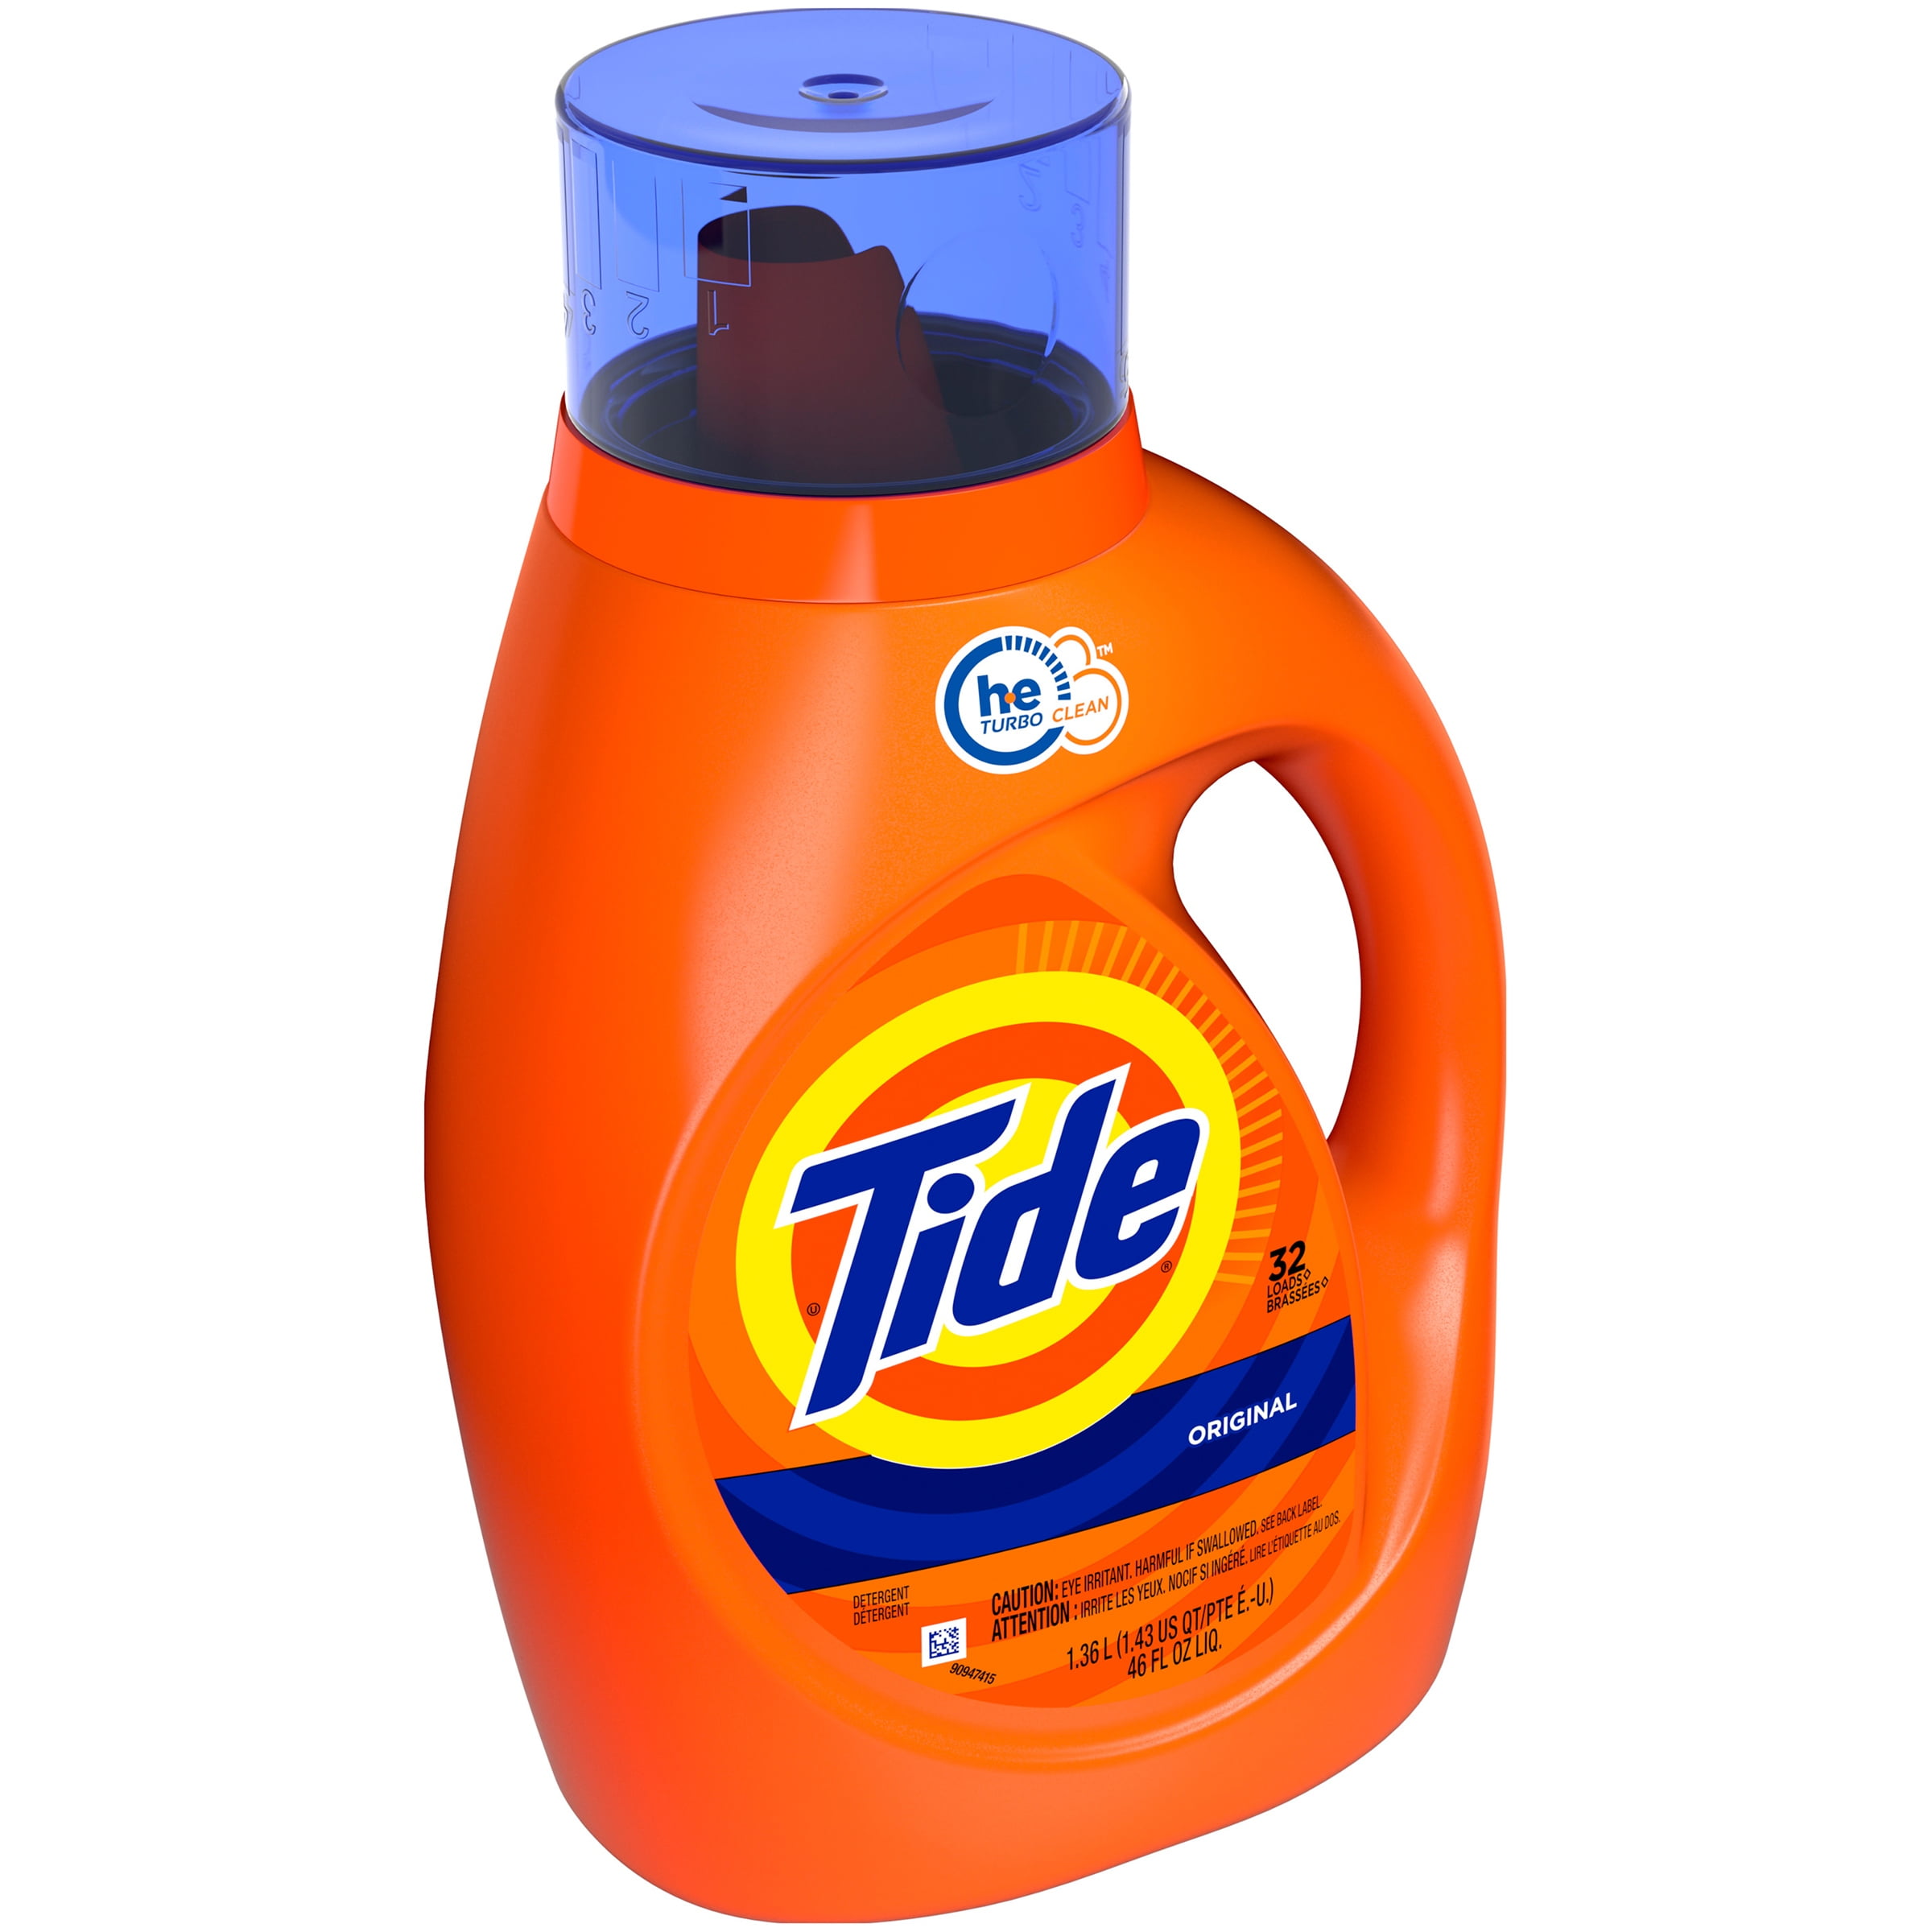 Tide Liquid Laundry Detergent, Original, 32 loads, 46 fl. oz. - Walmart.com